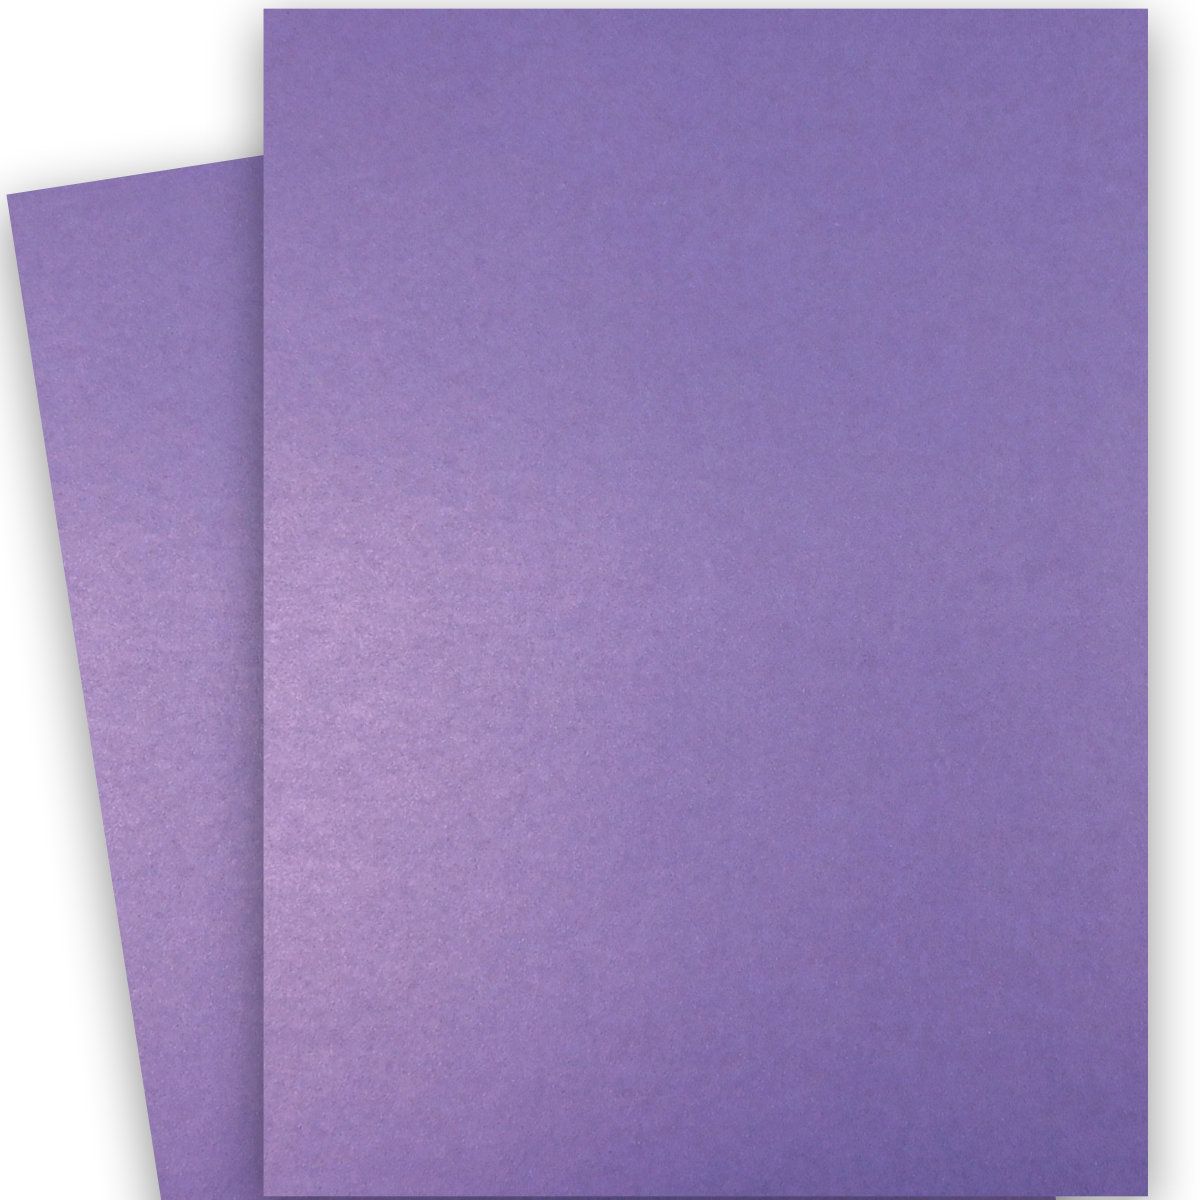 Shine RED SATIN - Shimmer Metallic Card Stock Paper - 8.5 x 11